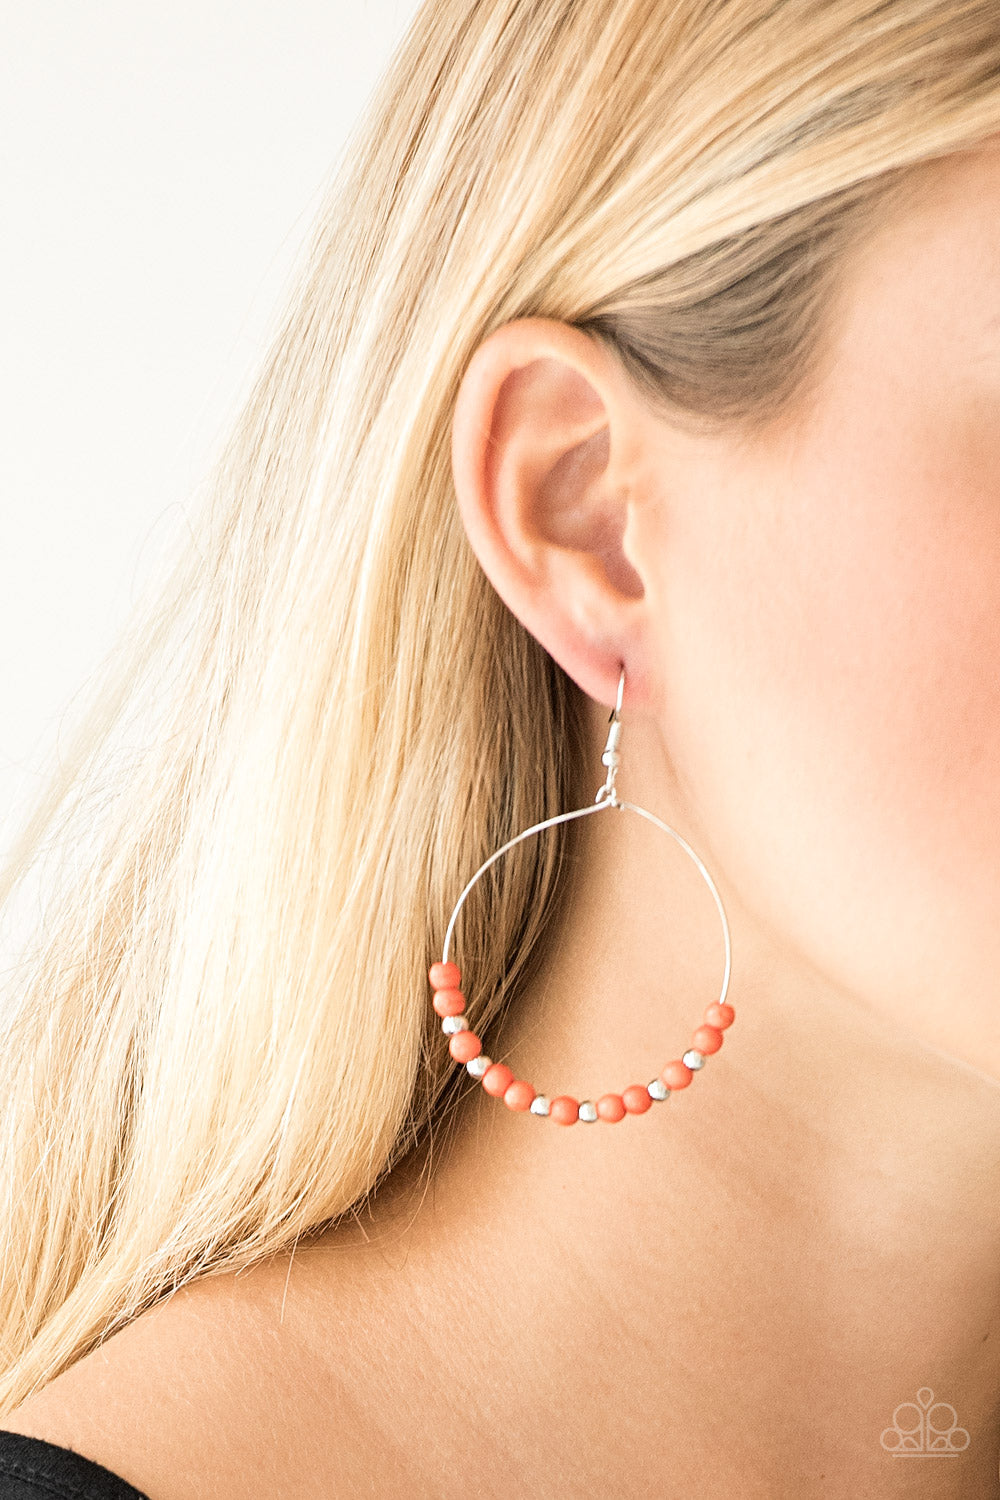 Paparazzi Stone Spa - Orange Stone - Silver Hoop Earrings - $5 Jewelry With Ashley Swint